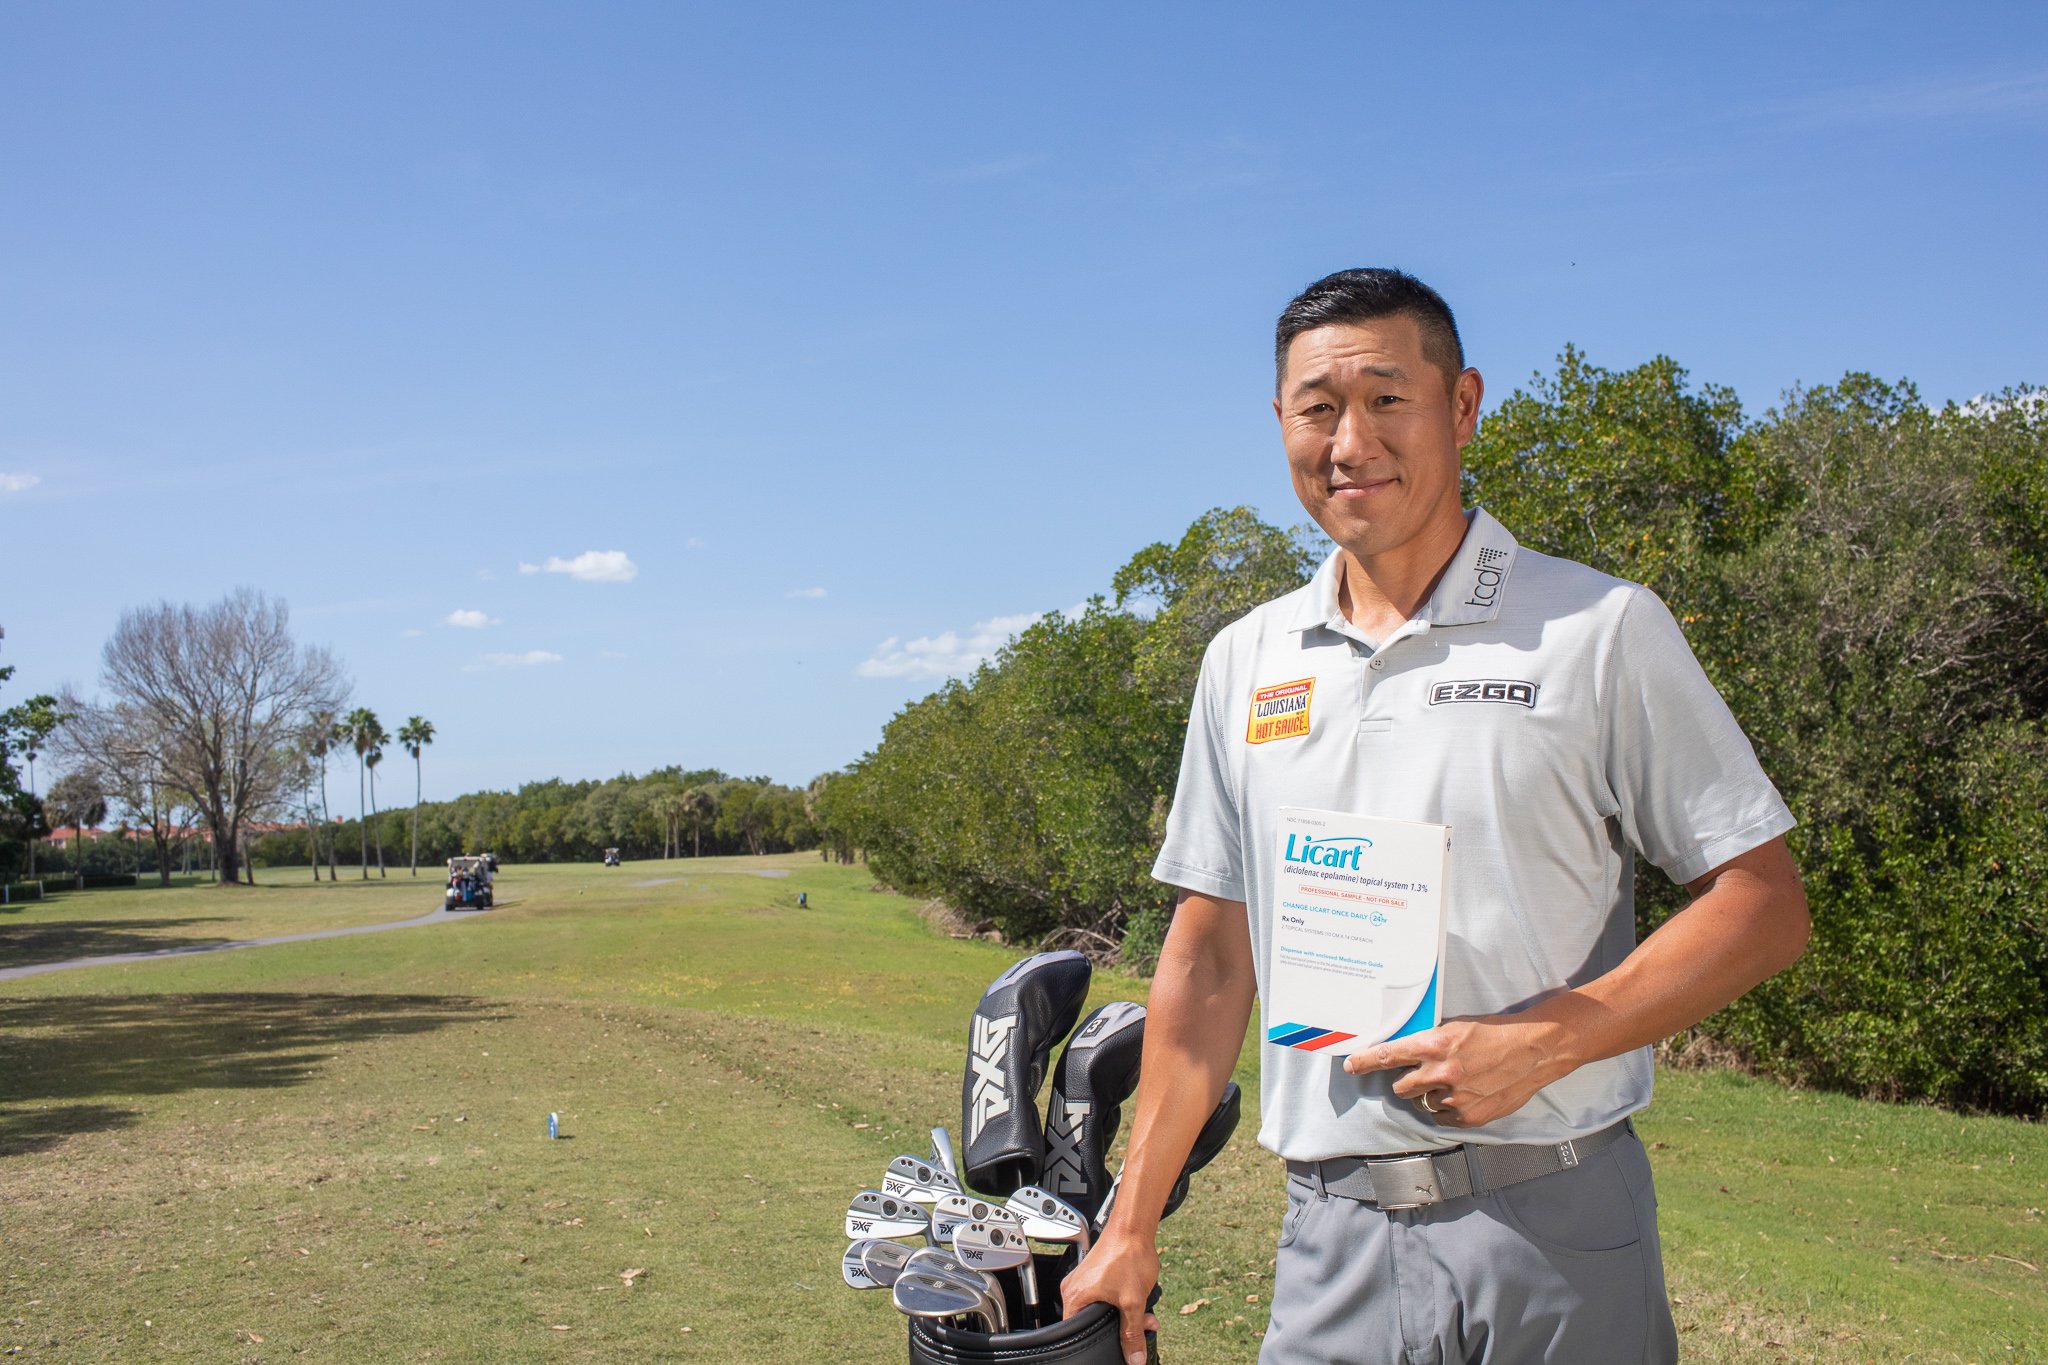 IBSA enlists PGA golfer James Hahn as spokesman for Licart pain patch